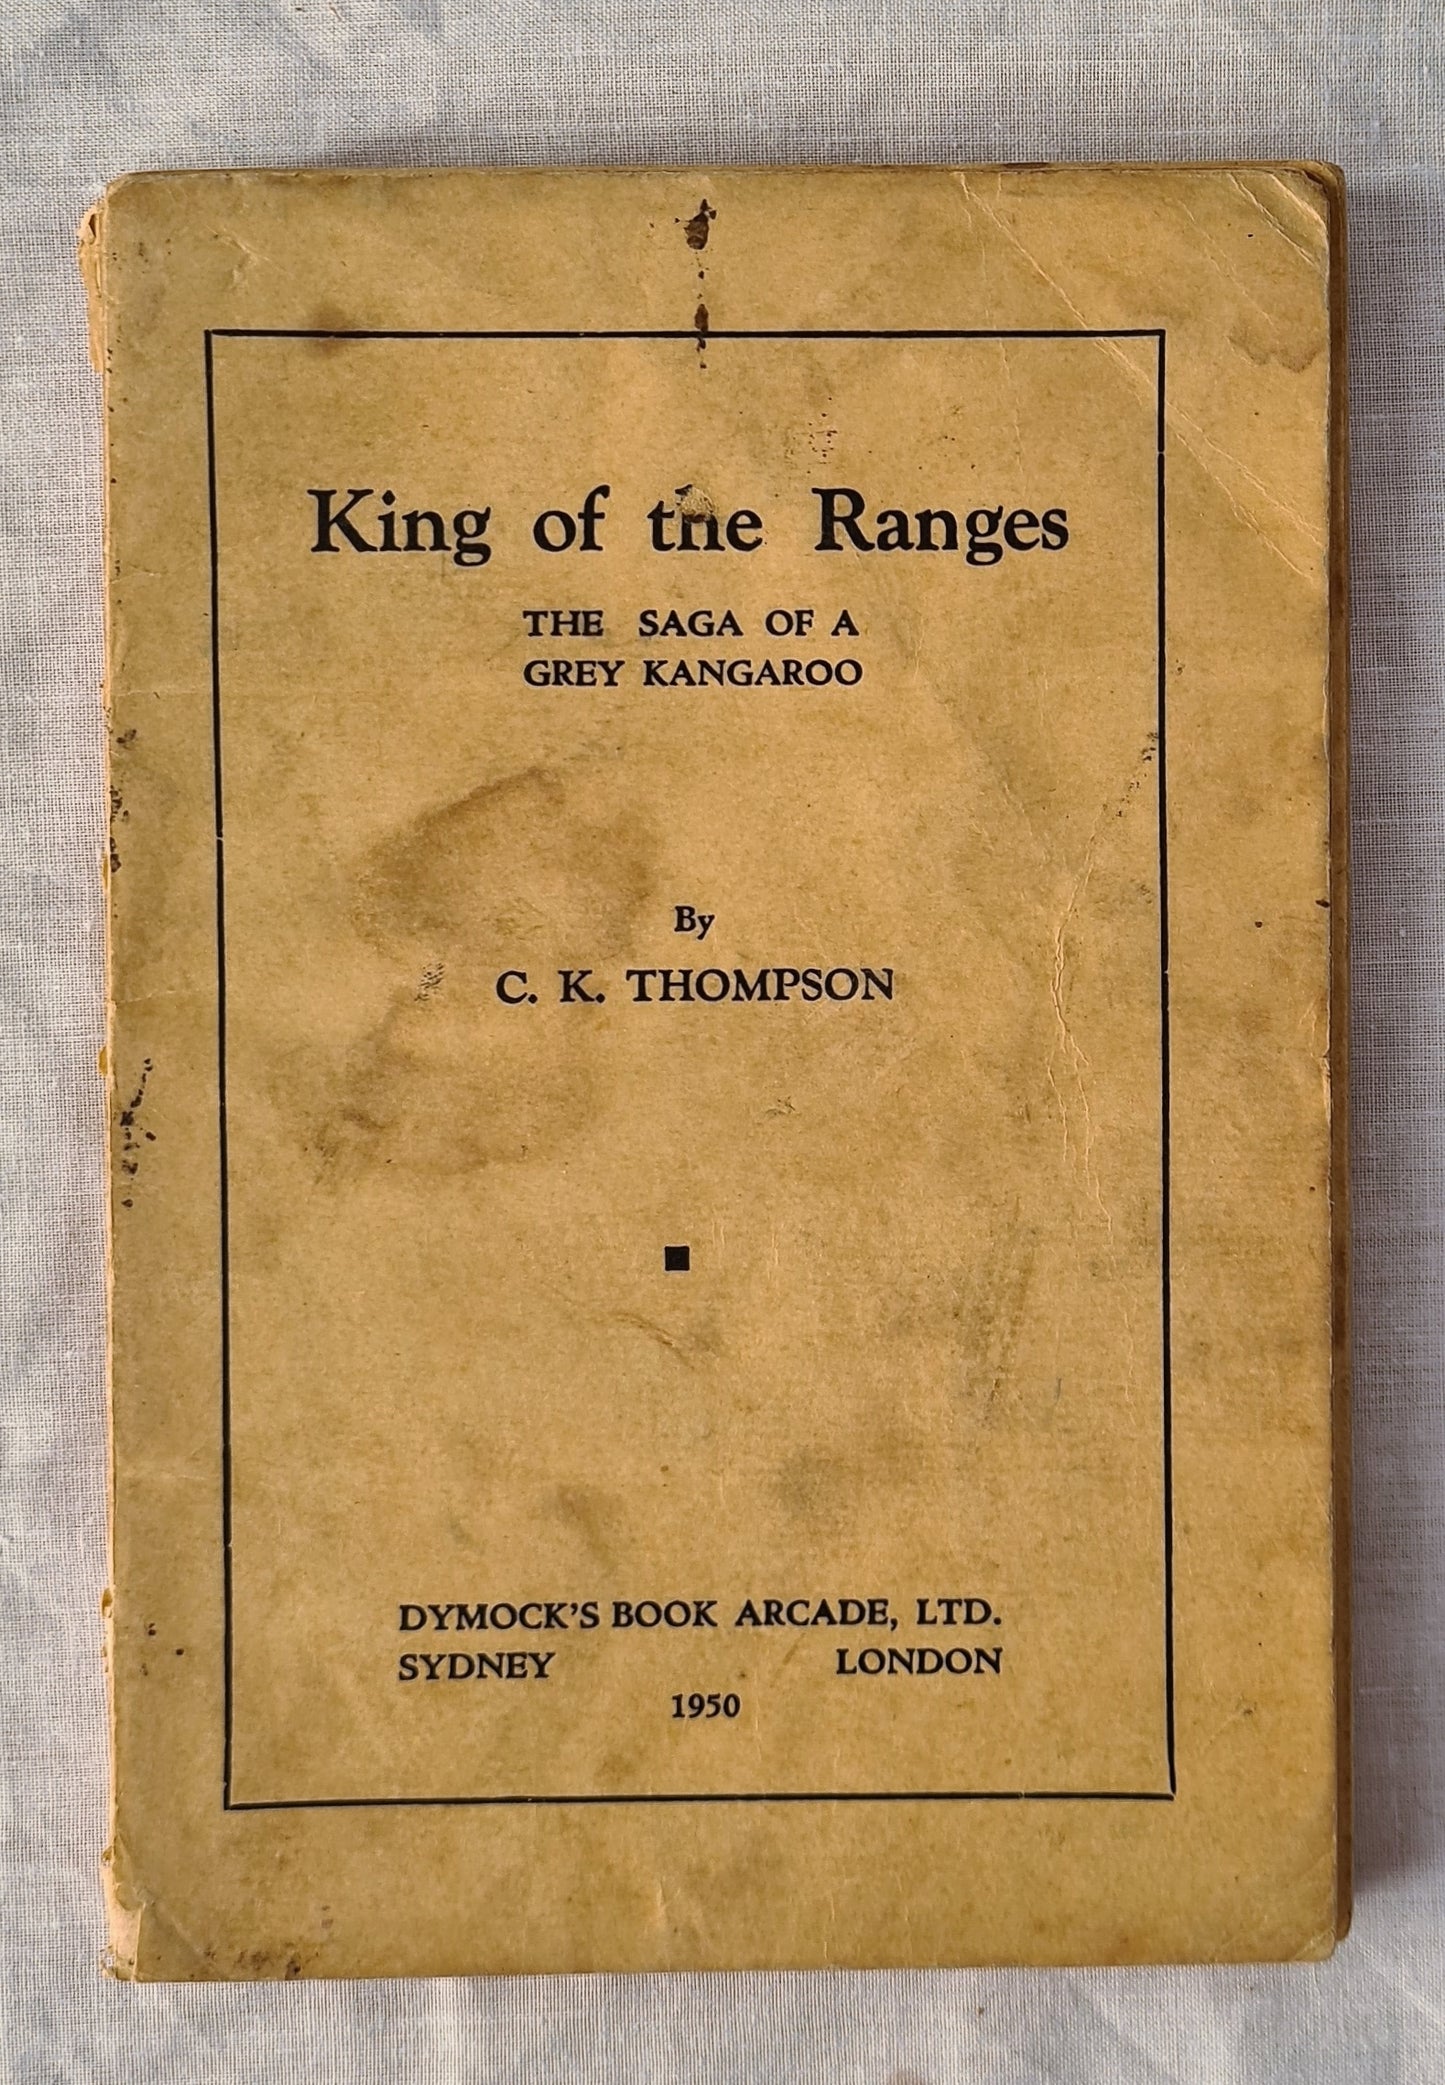 King of the Ranges  The Saga of a Grey Kangaroo  by C. K. Thompson